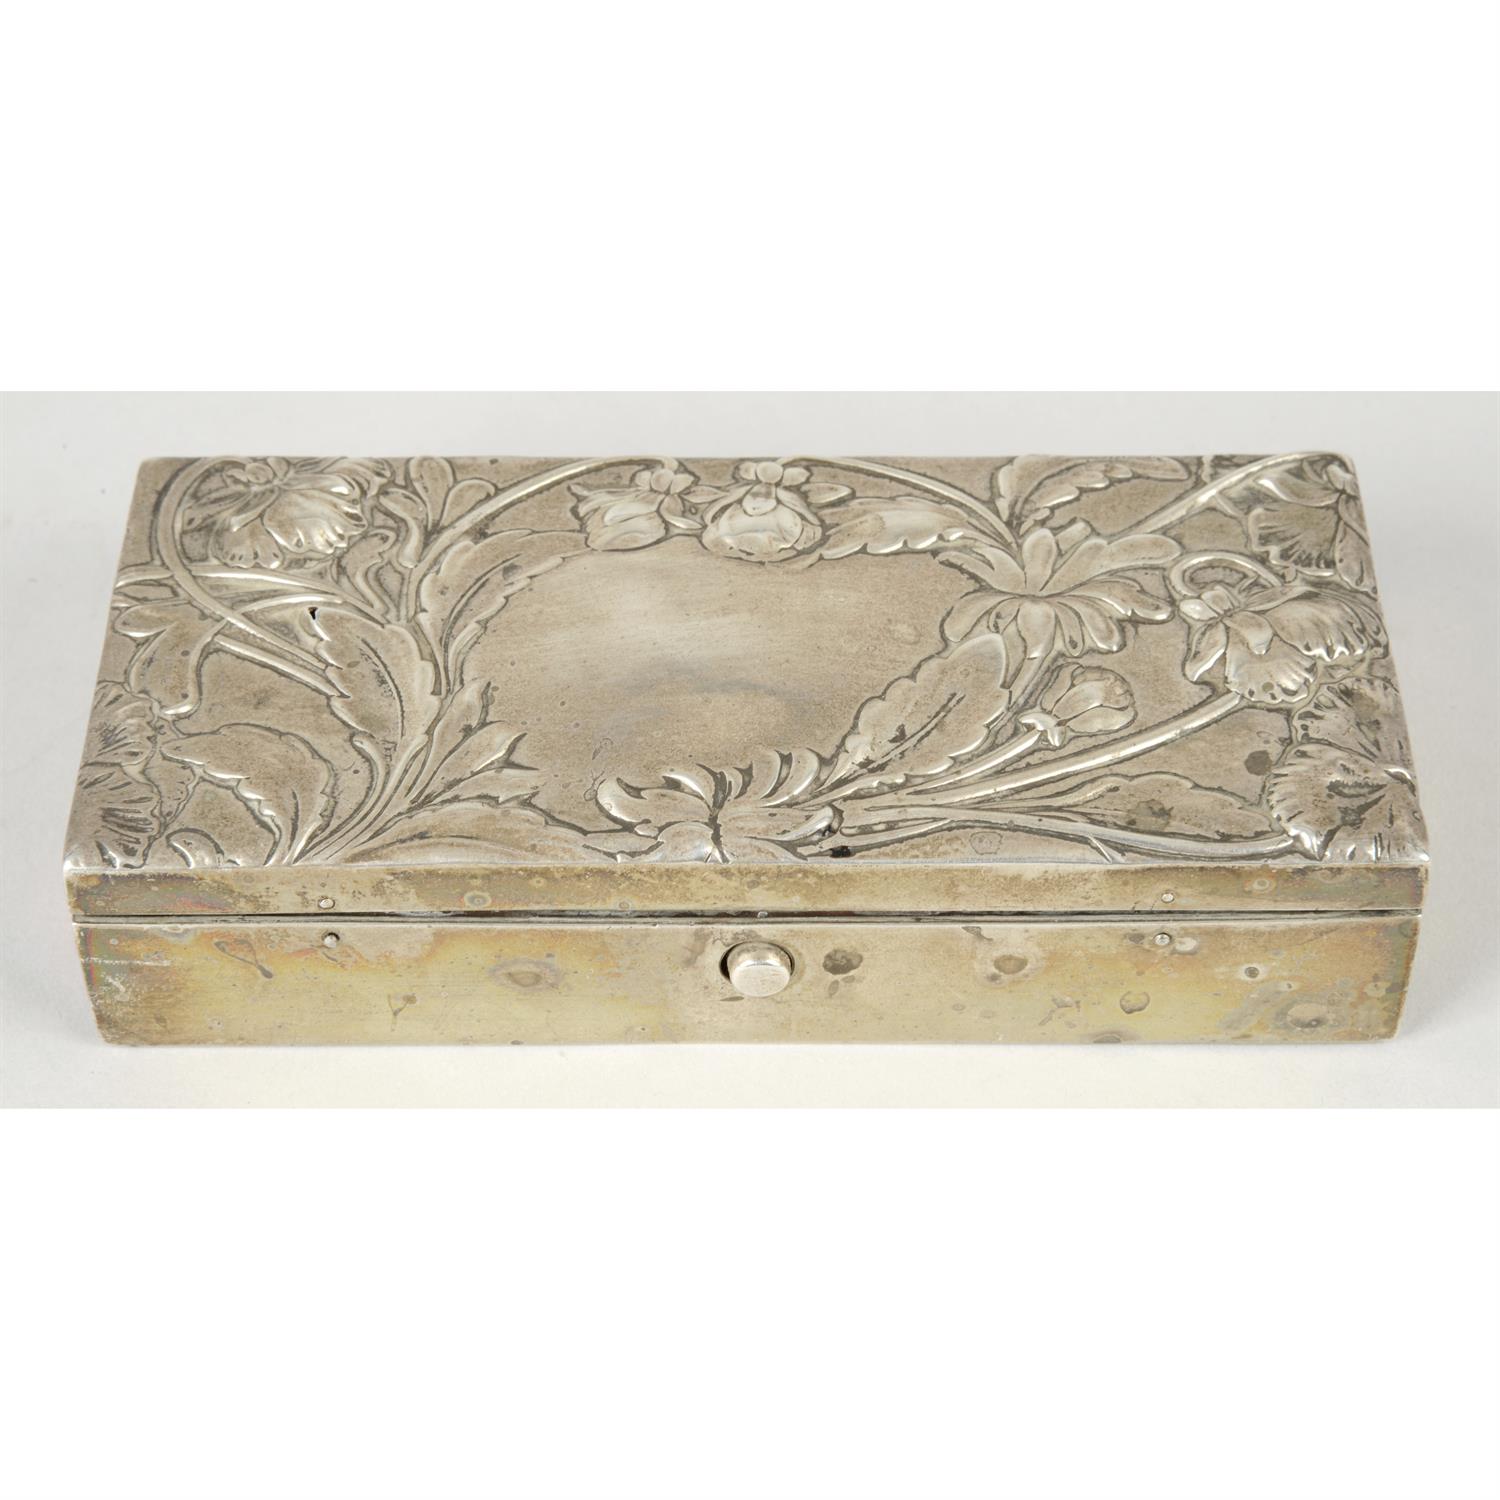 Edwardian silver mounted box, wood lined.